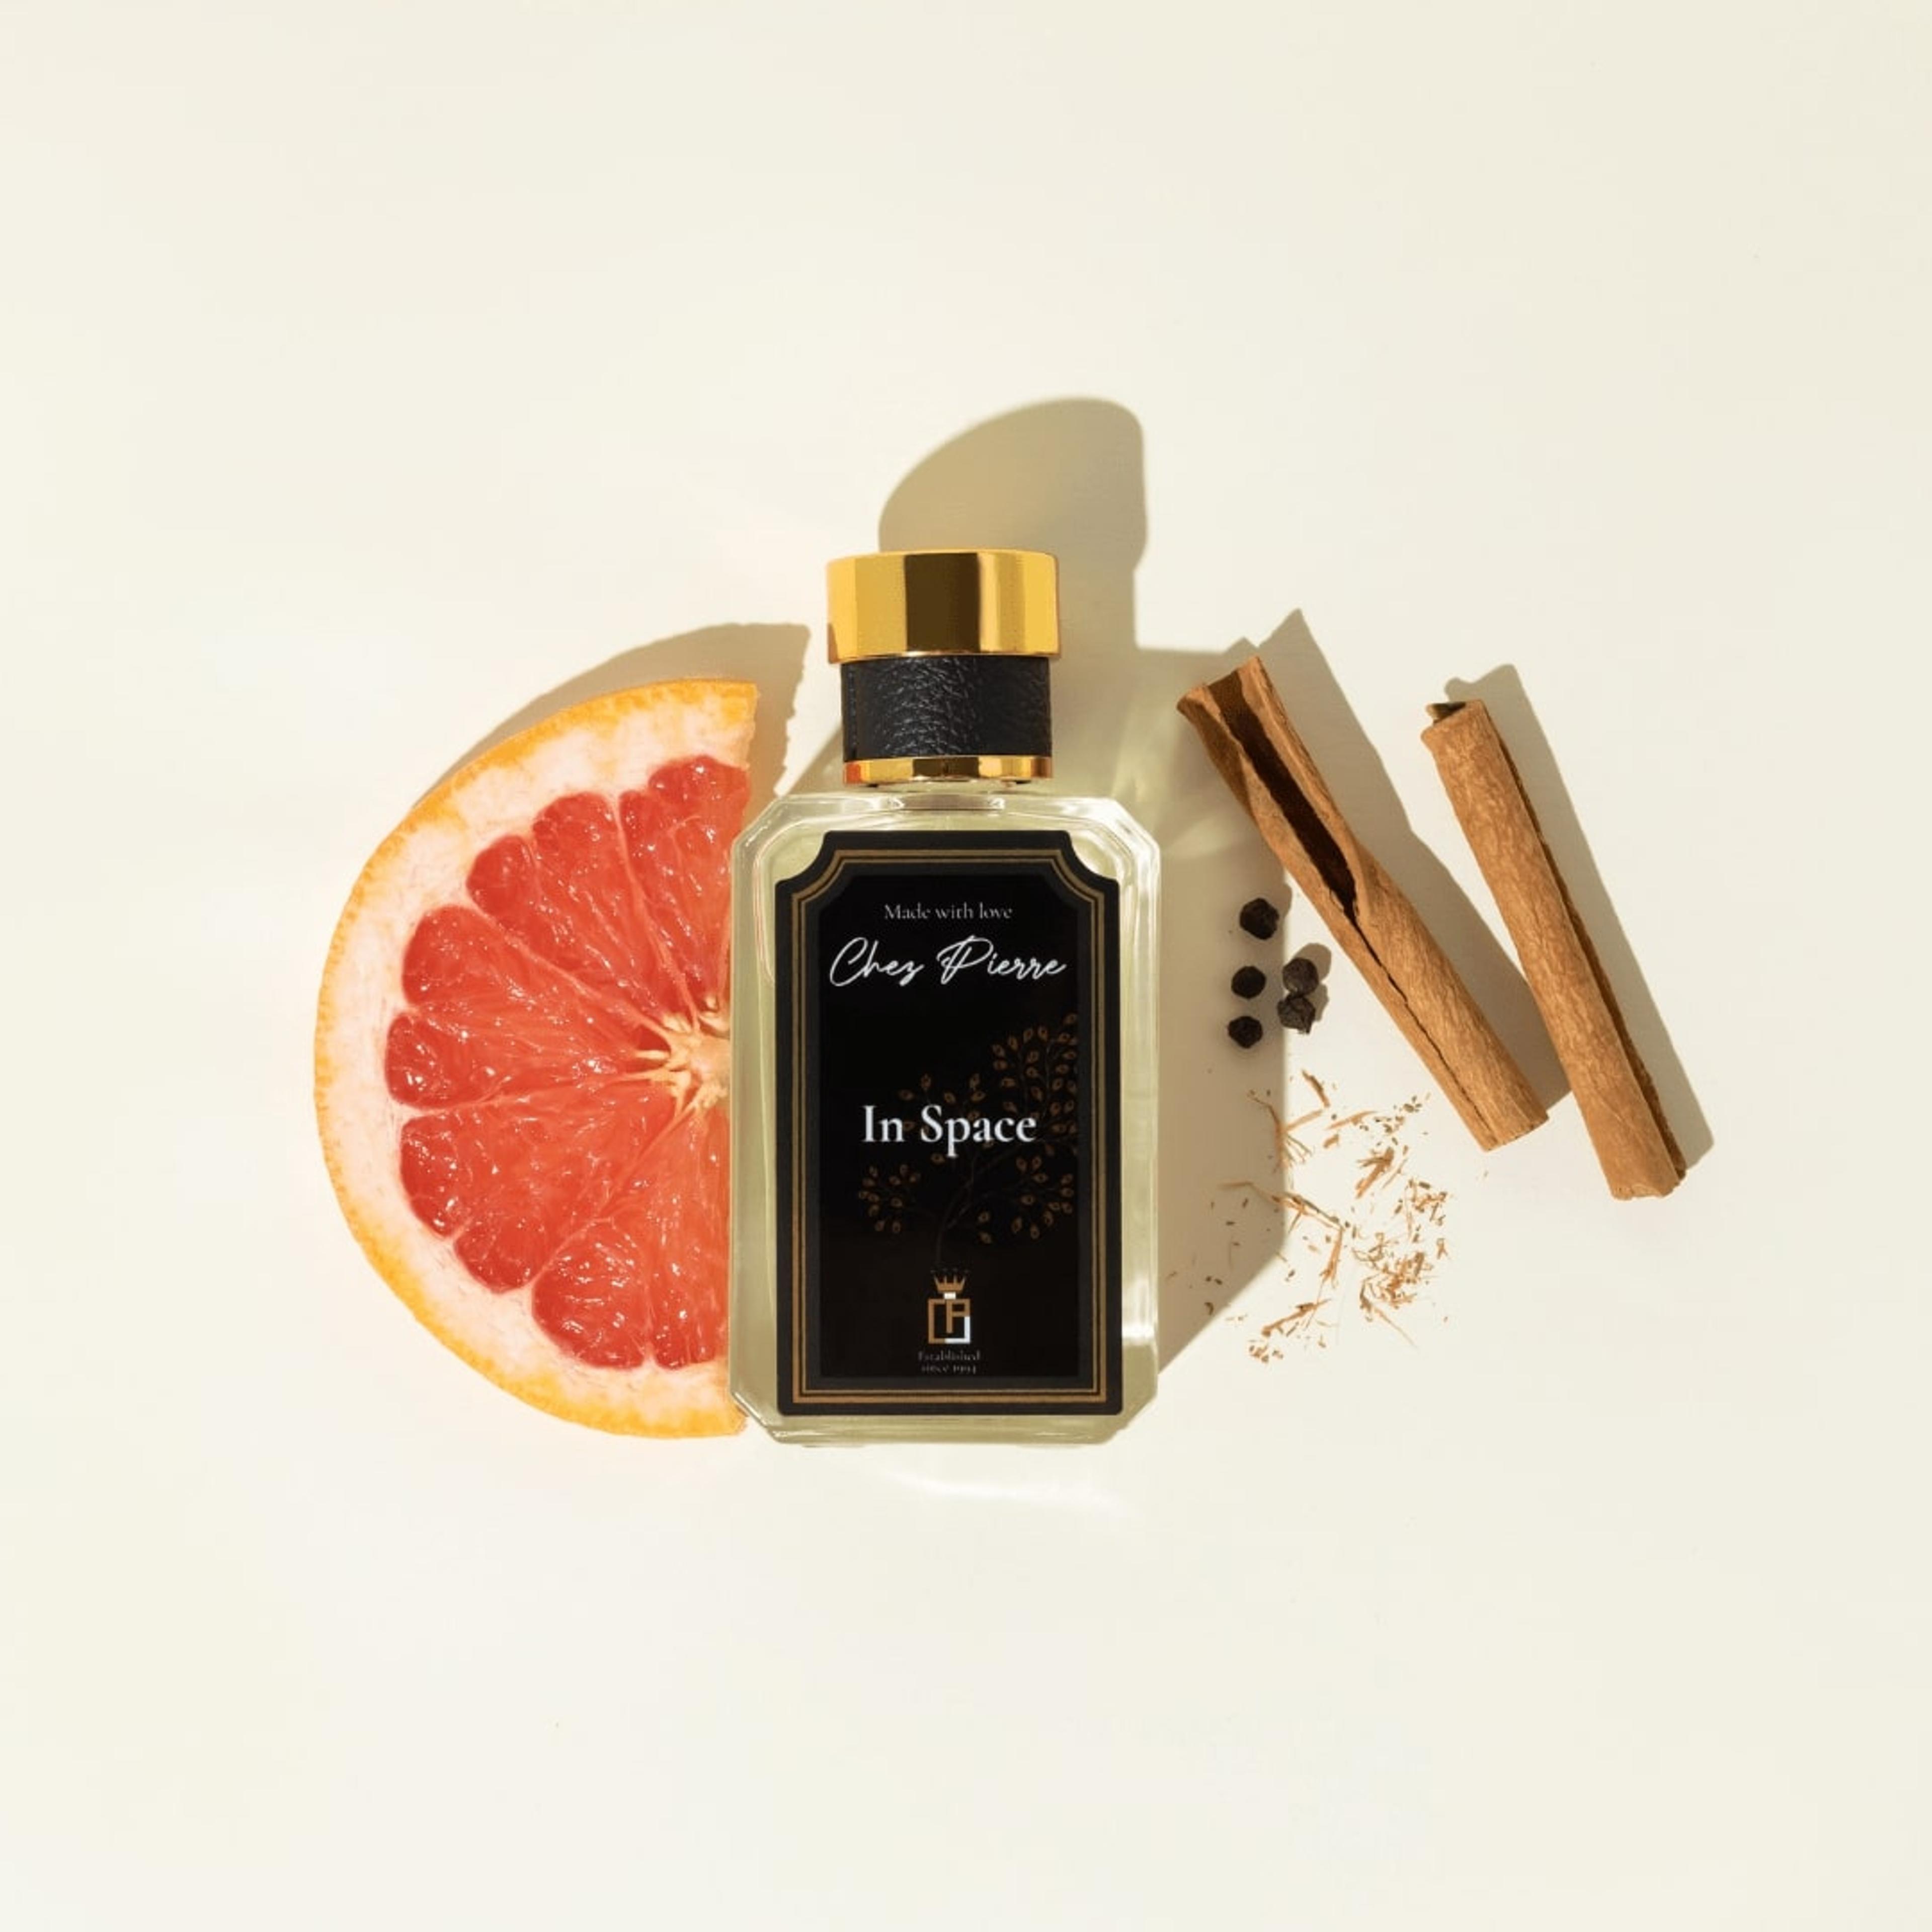 Chez Pierre's Aventure Perfume Inspired By Creed Aventus